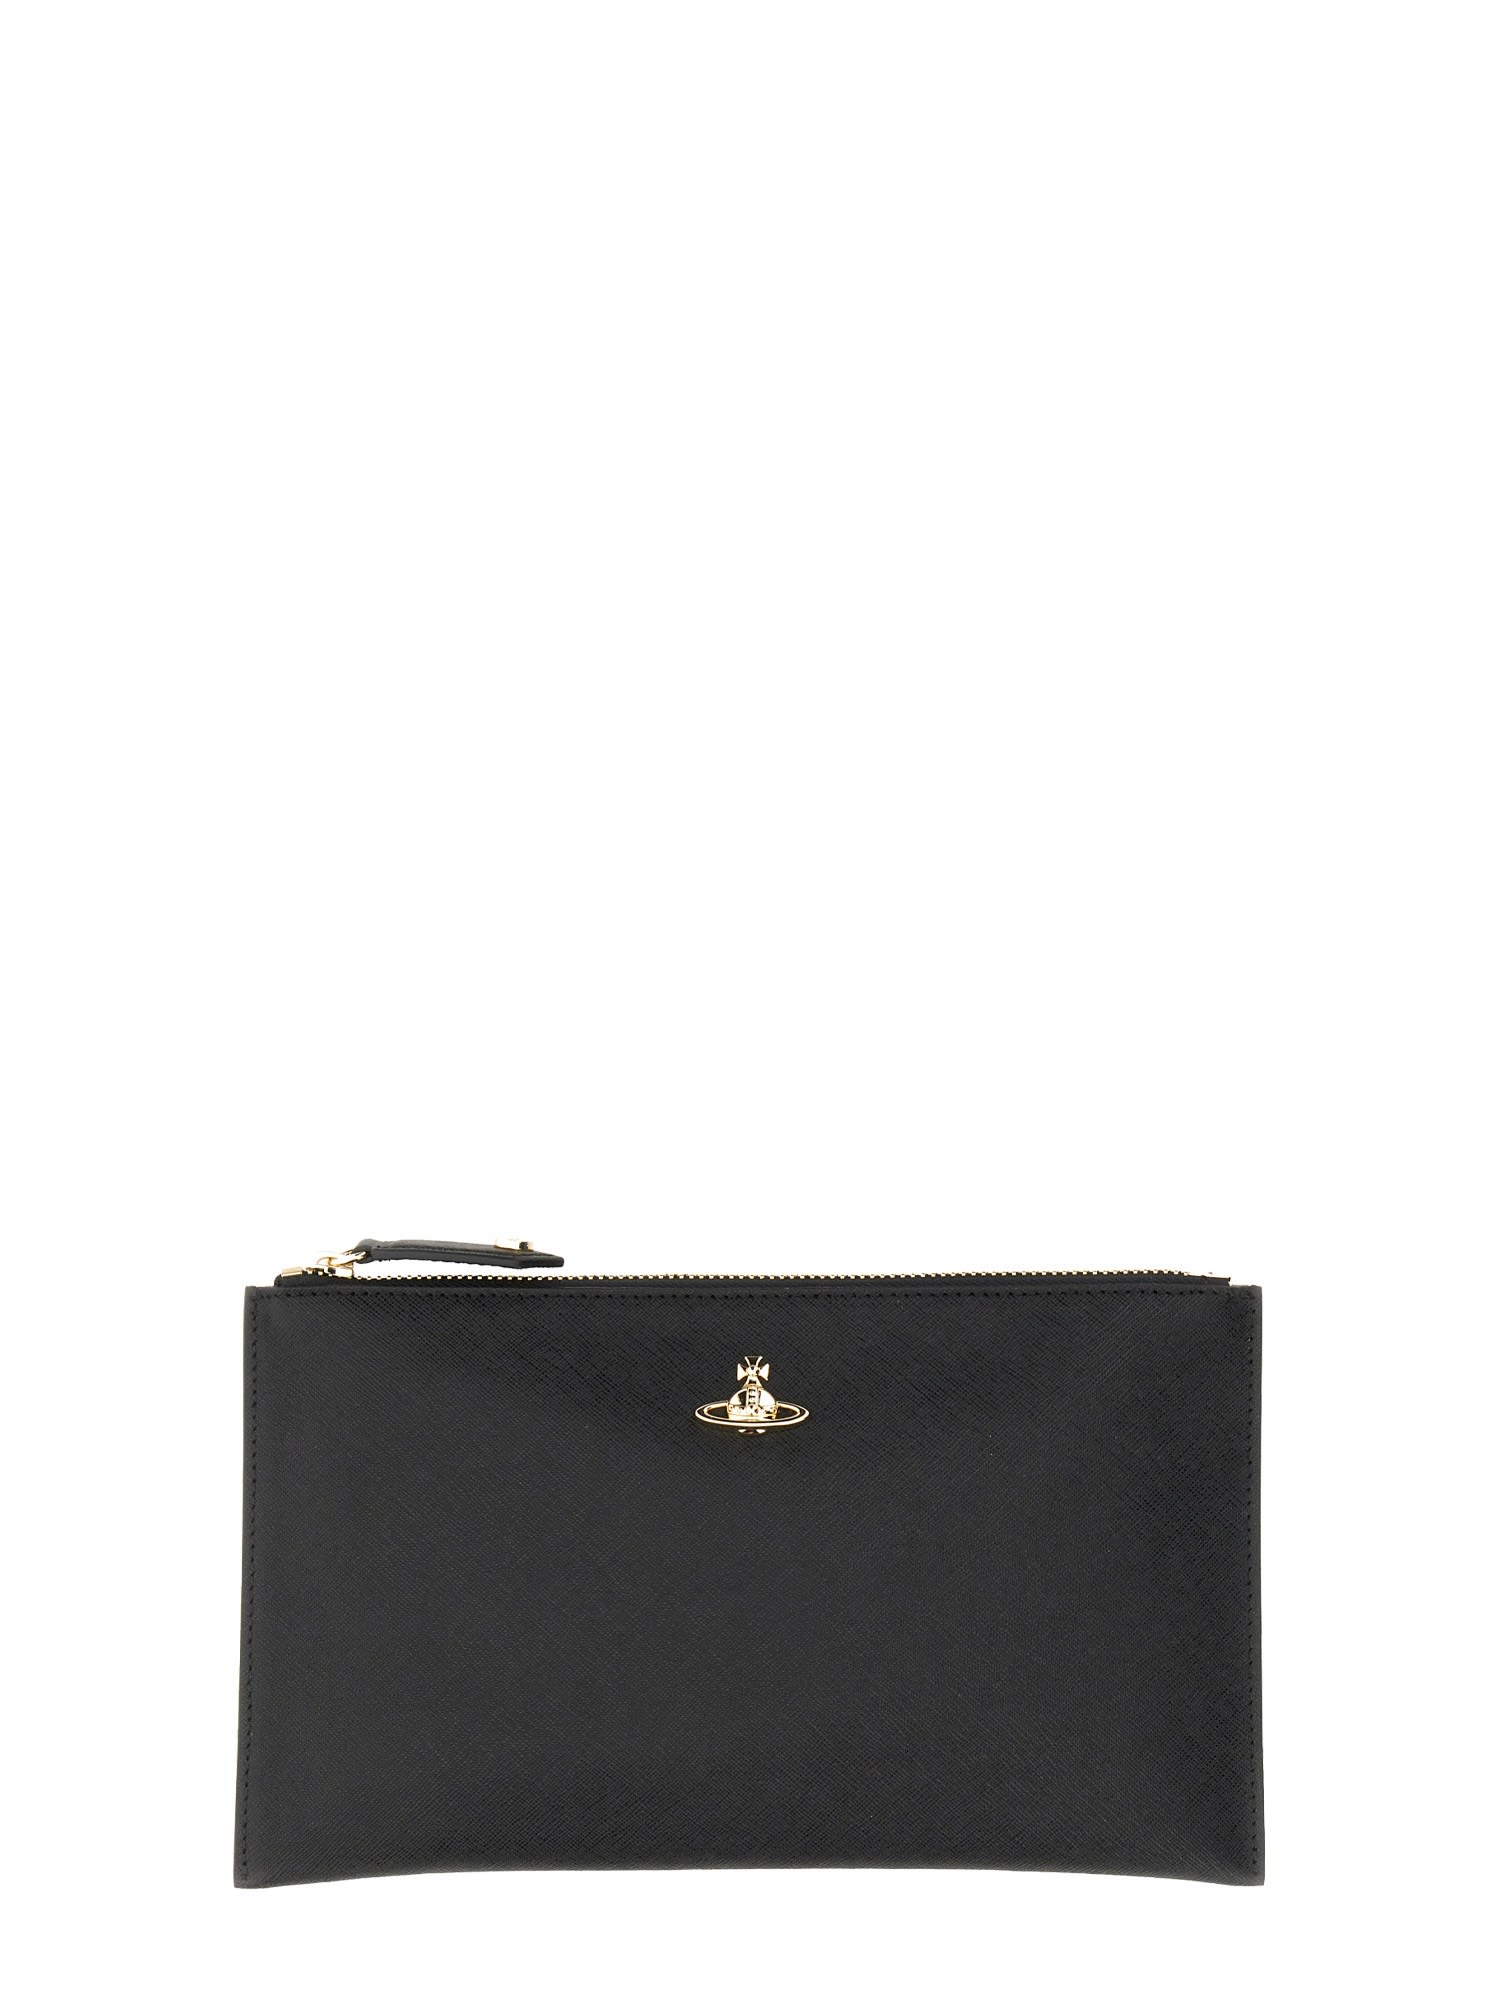 Vivienne Westwood Victoria Leather Clutch Bag